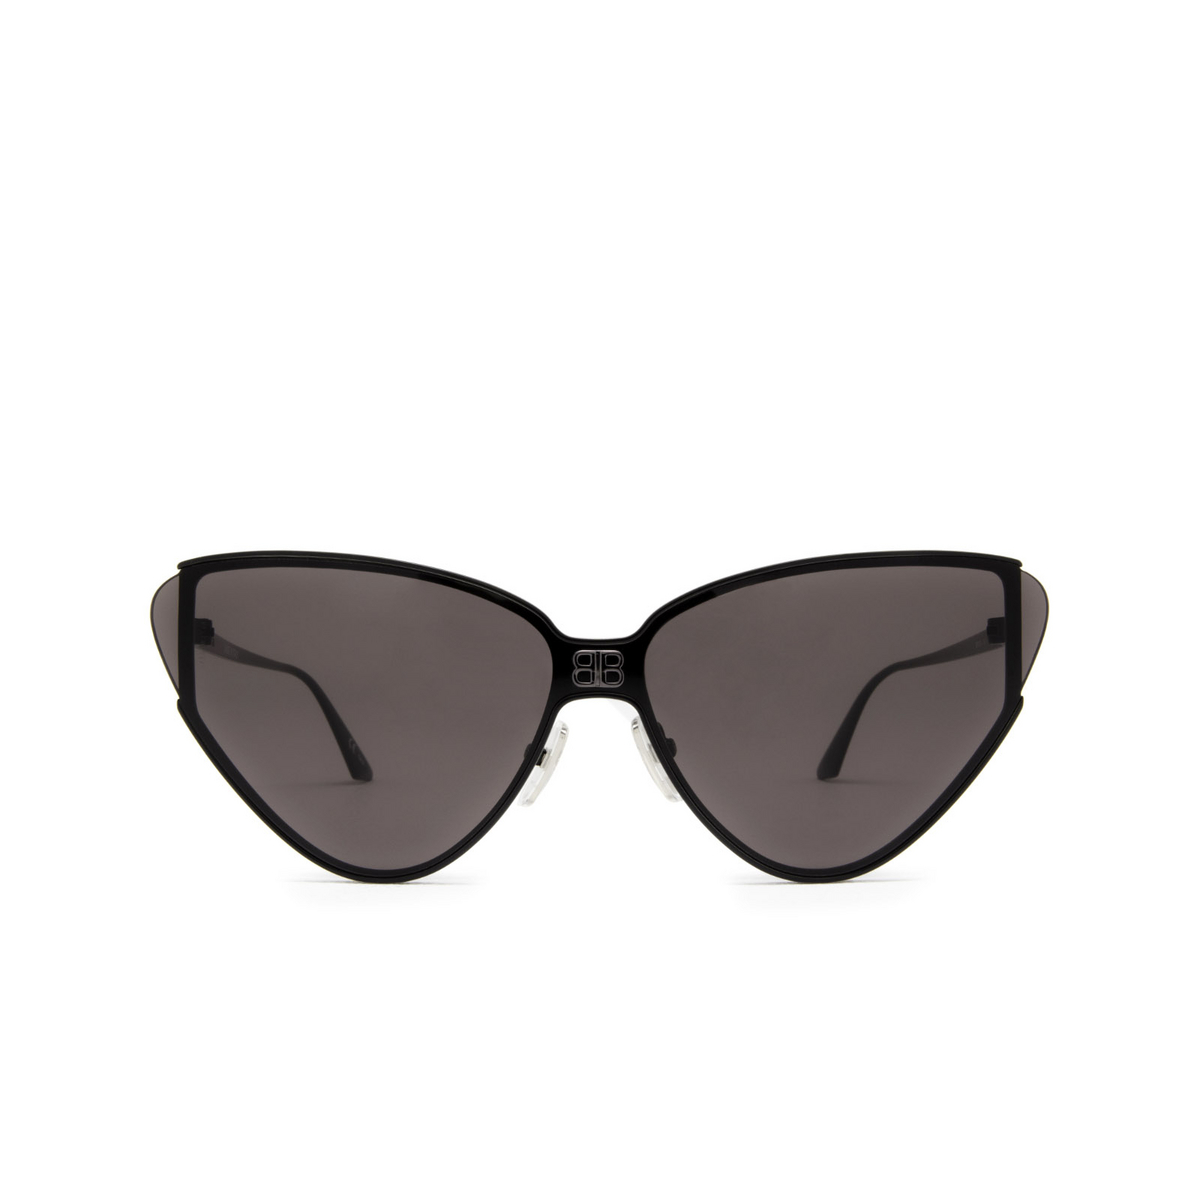 Balenciaga® Cat-eye Sunglasses: BB0191S color Black 001 - front view.